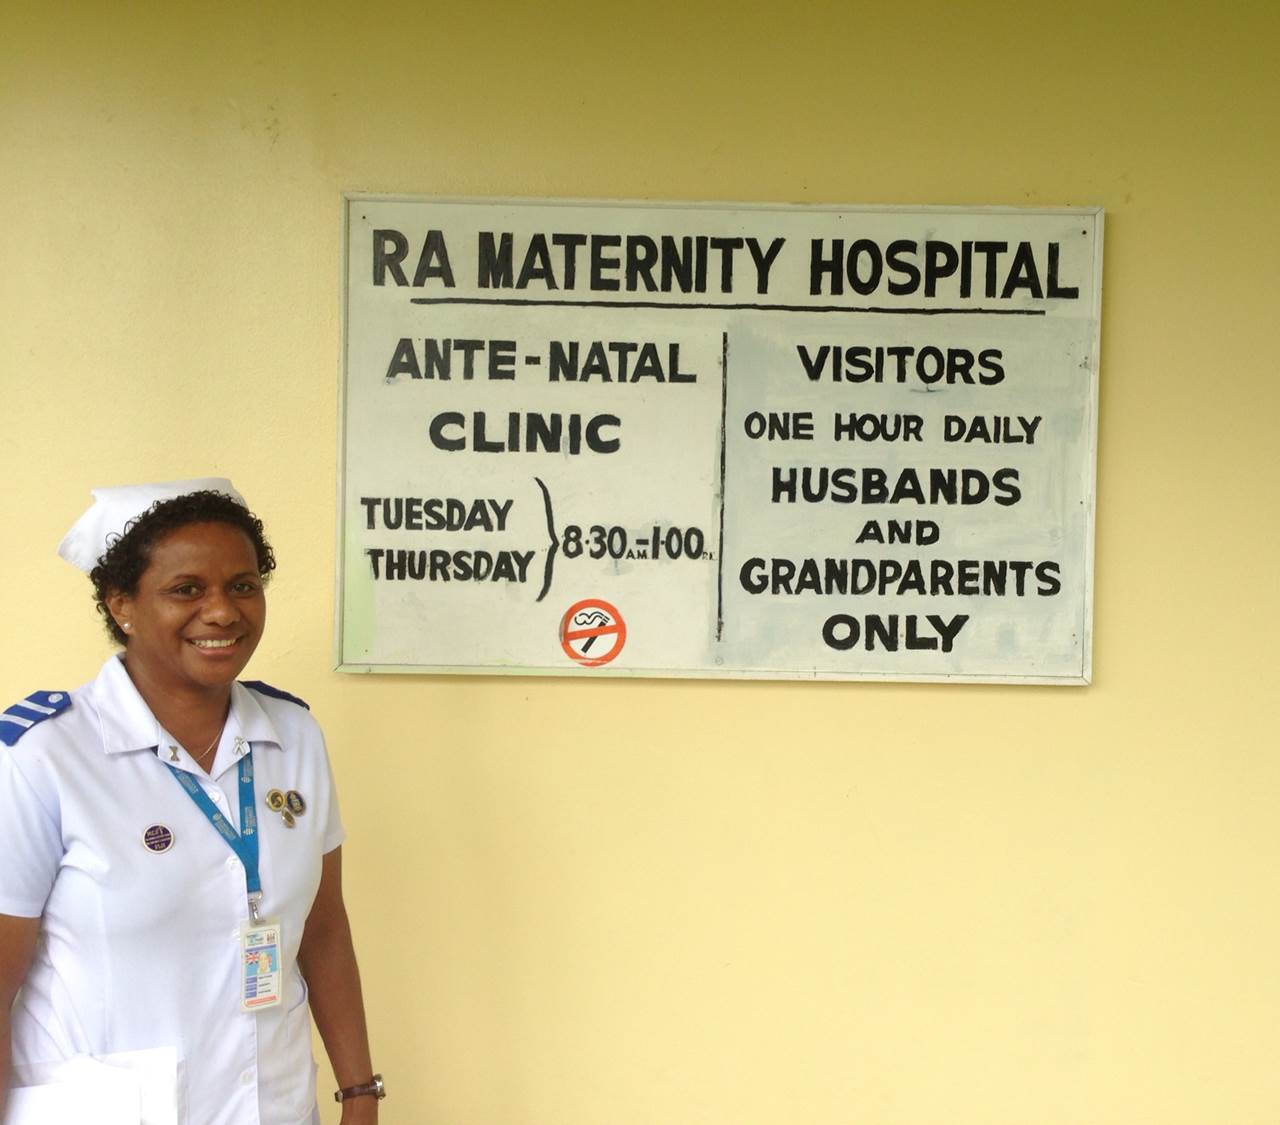 PAYCE on board as Major Sponsor of the Montessori Academy fundraiser to aid Fijian Hospital